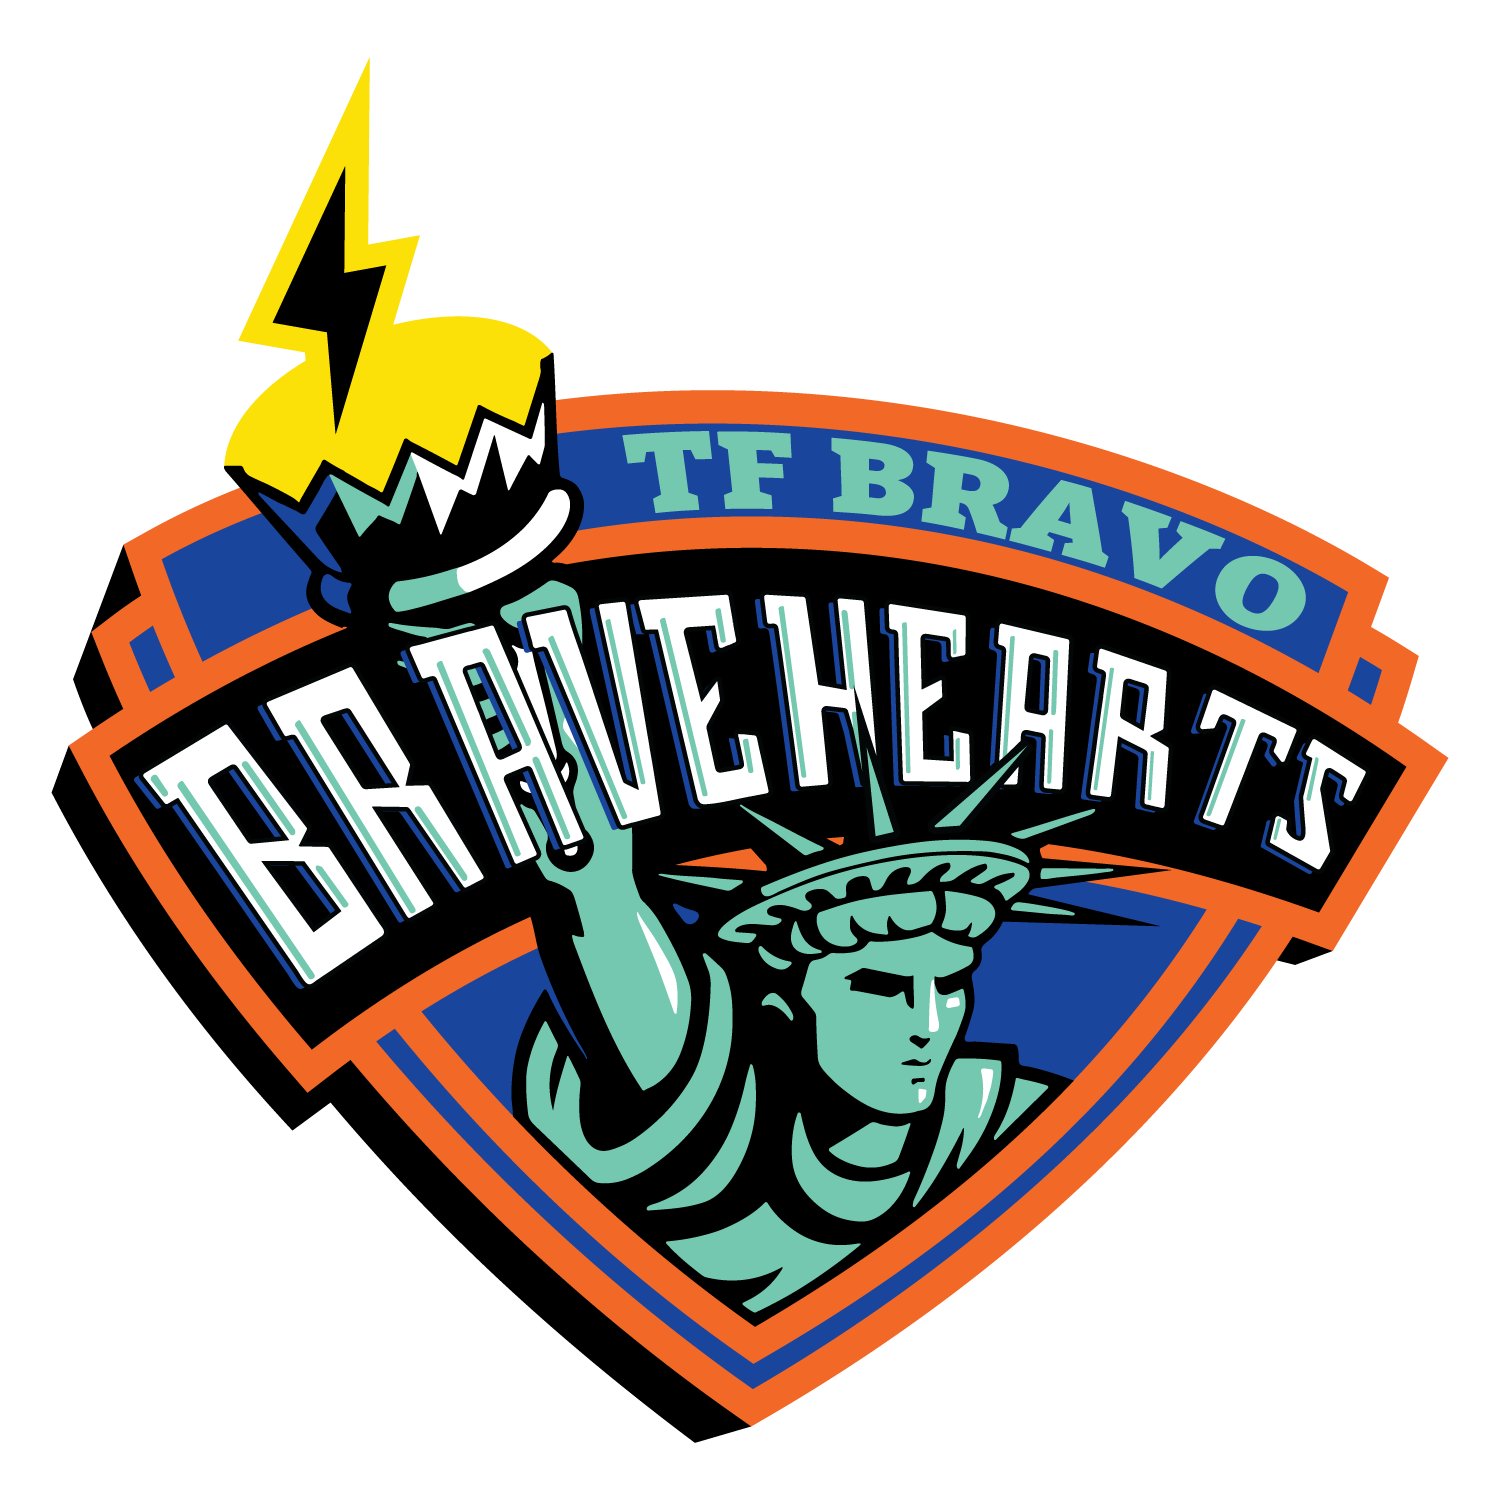 Task Force Bravo "Bravehearts"